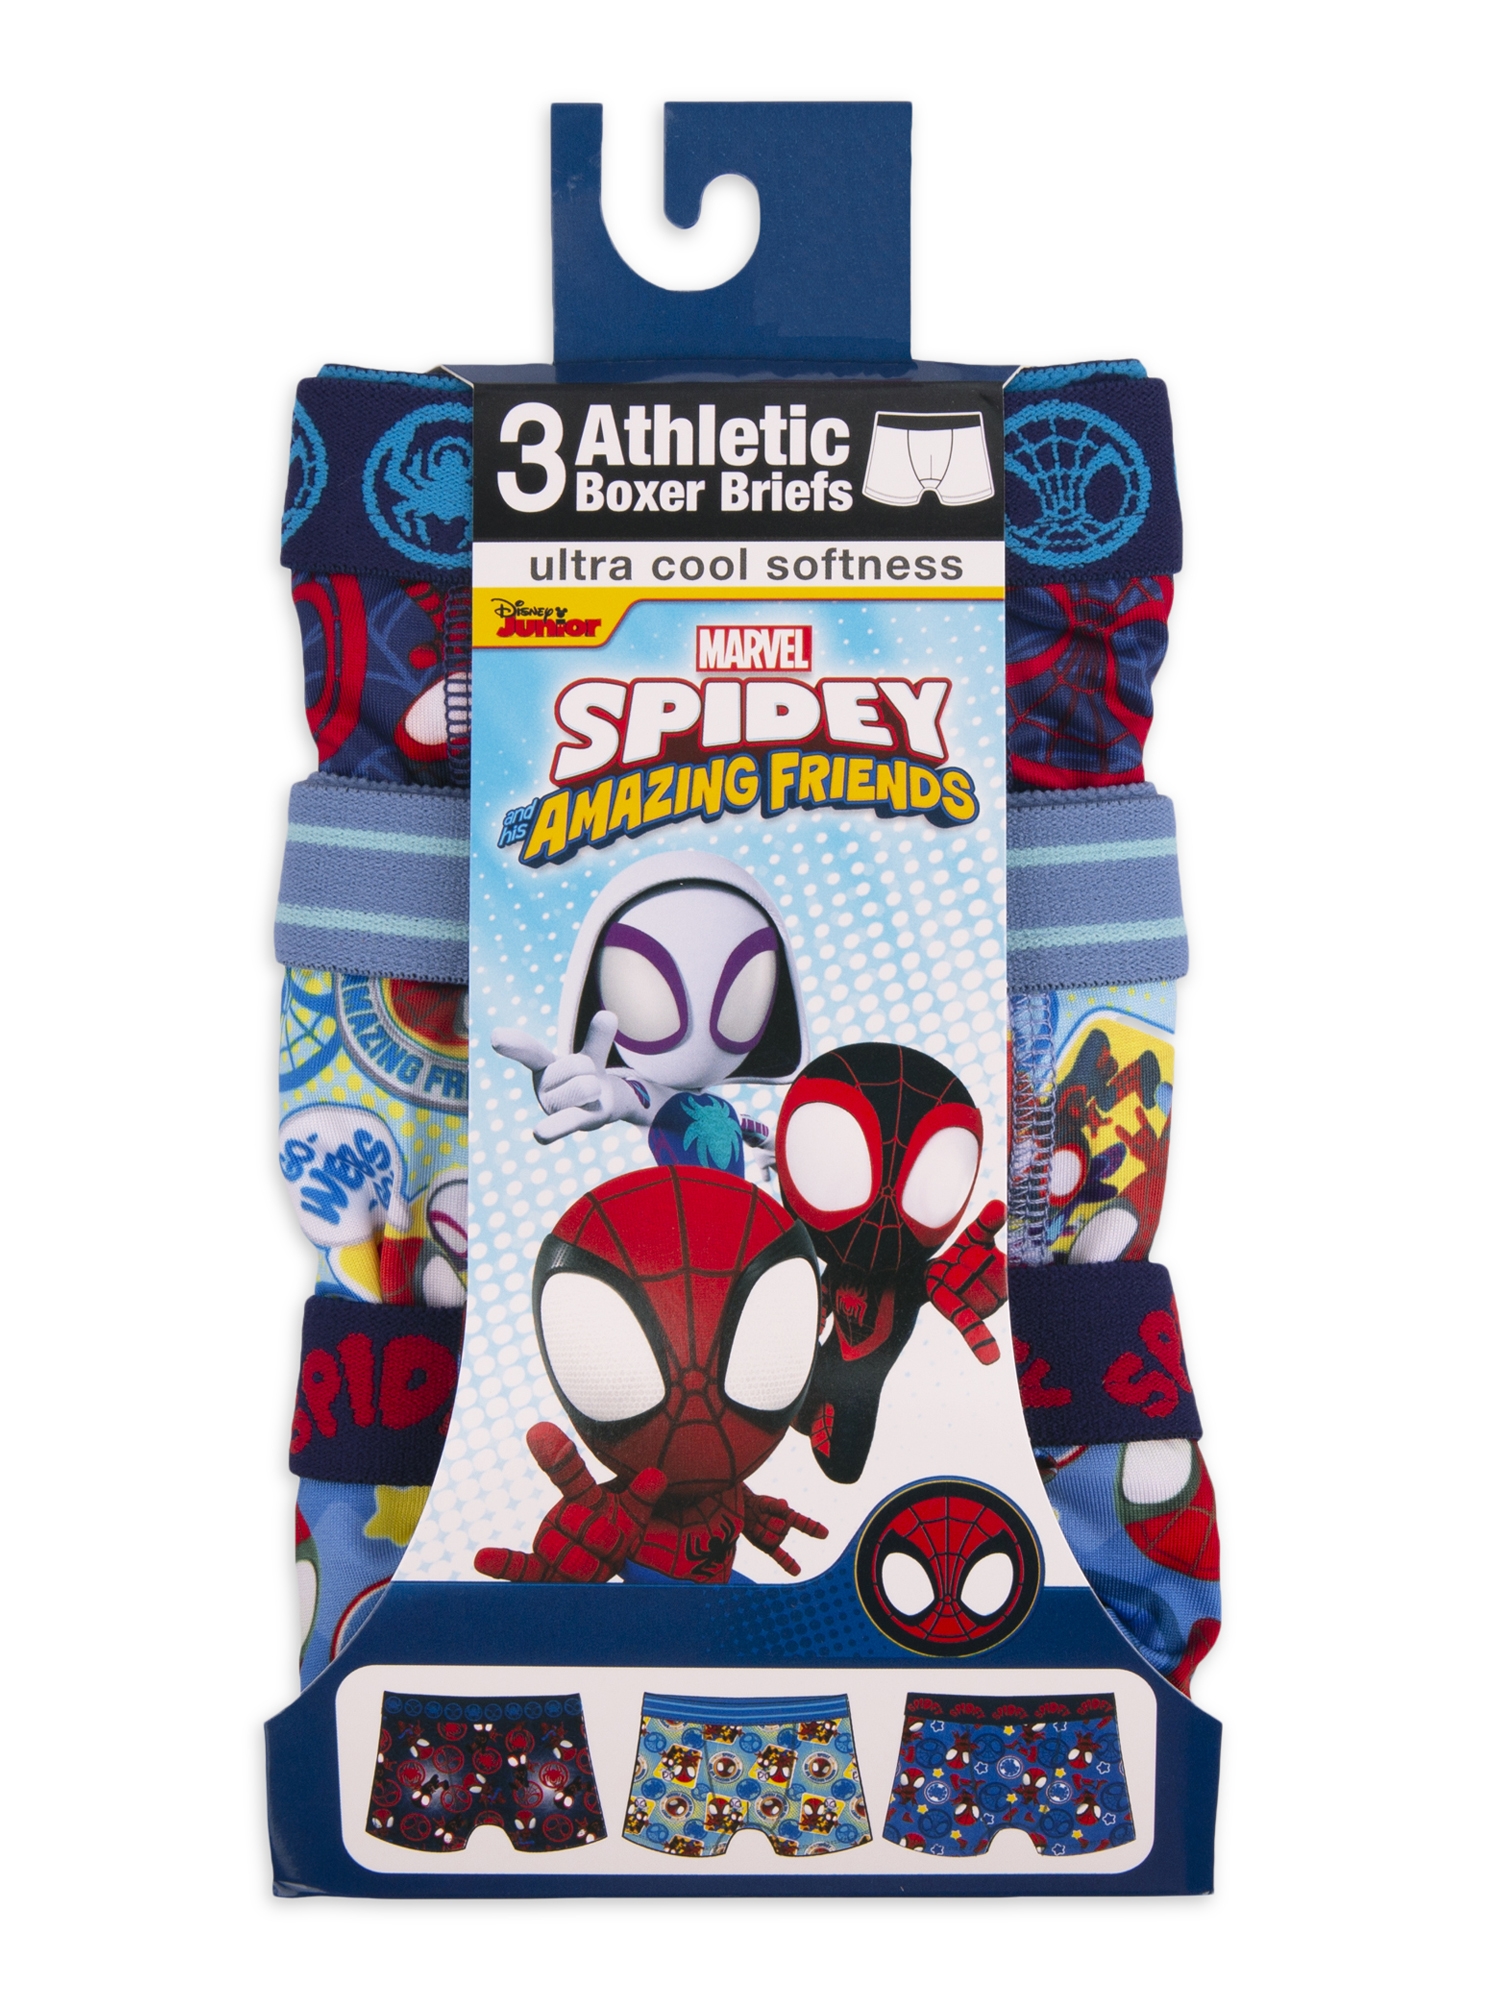 Mejores ofertas e historial de precios de Spiderman Toddler Boys Boxer  Briefs, 3 Pack, Sizes 2T-4T en